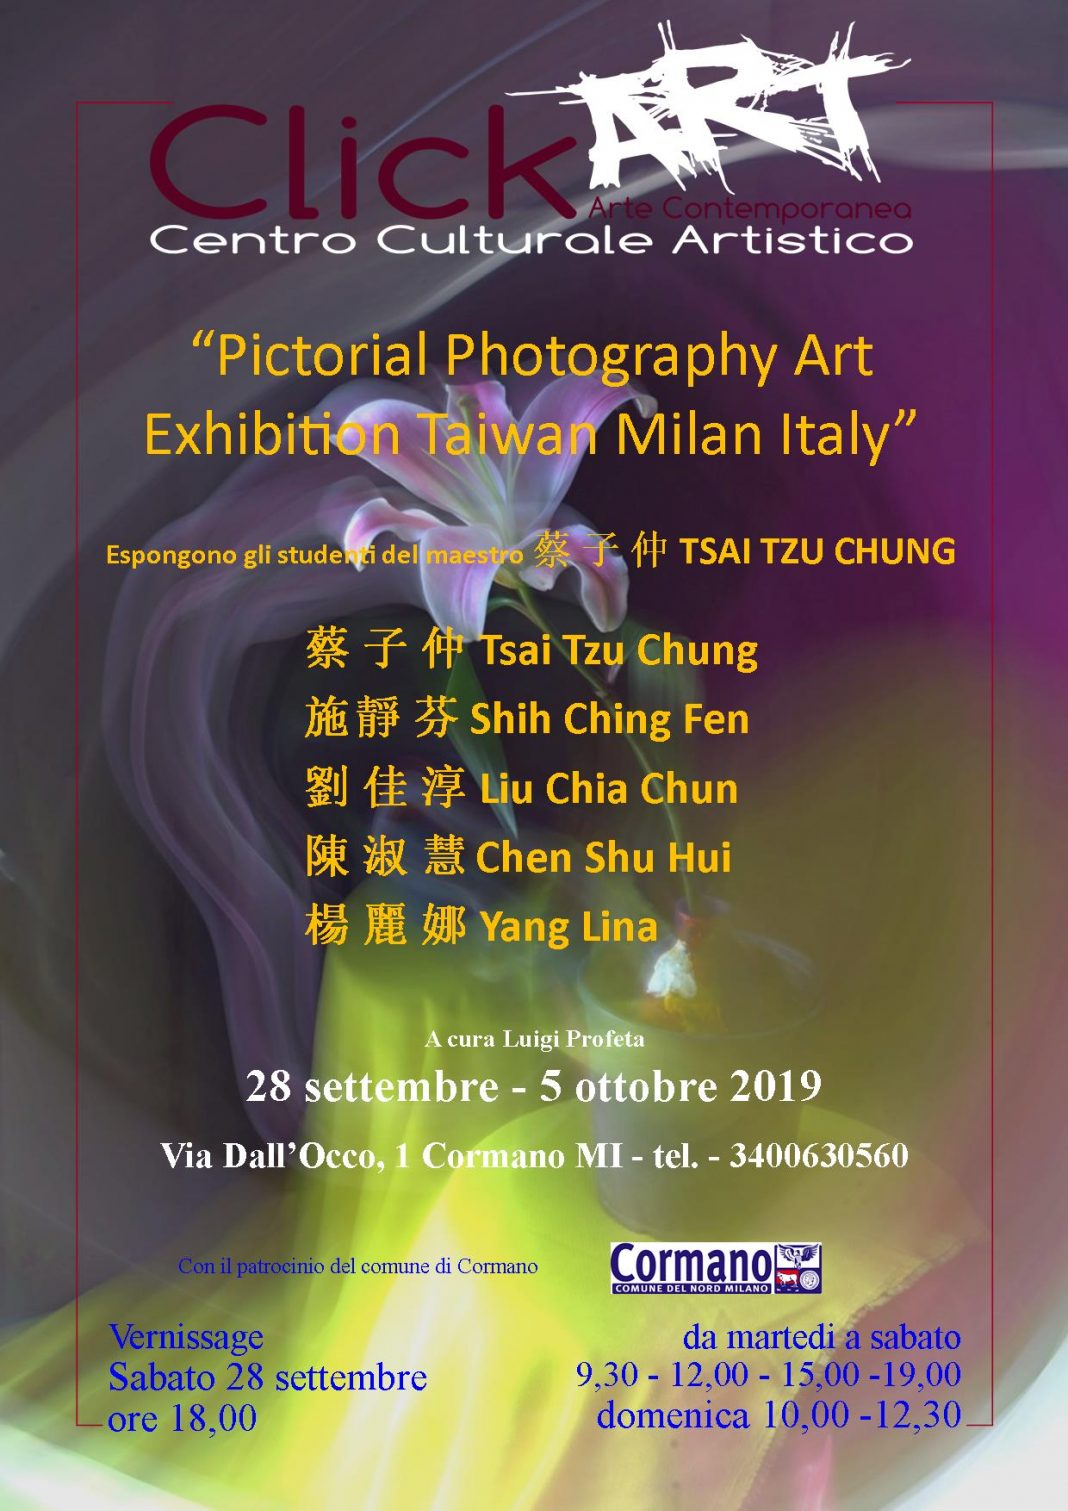 Pictorial Photography Art Exhibition Taiwan Milan Italyhttps://www.exibart.com/repository/media/formidable/11/Locandina-Taiwan-1068x1511.jpg